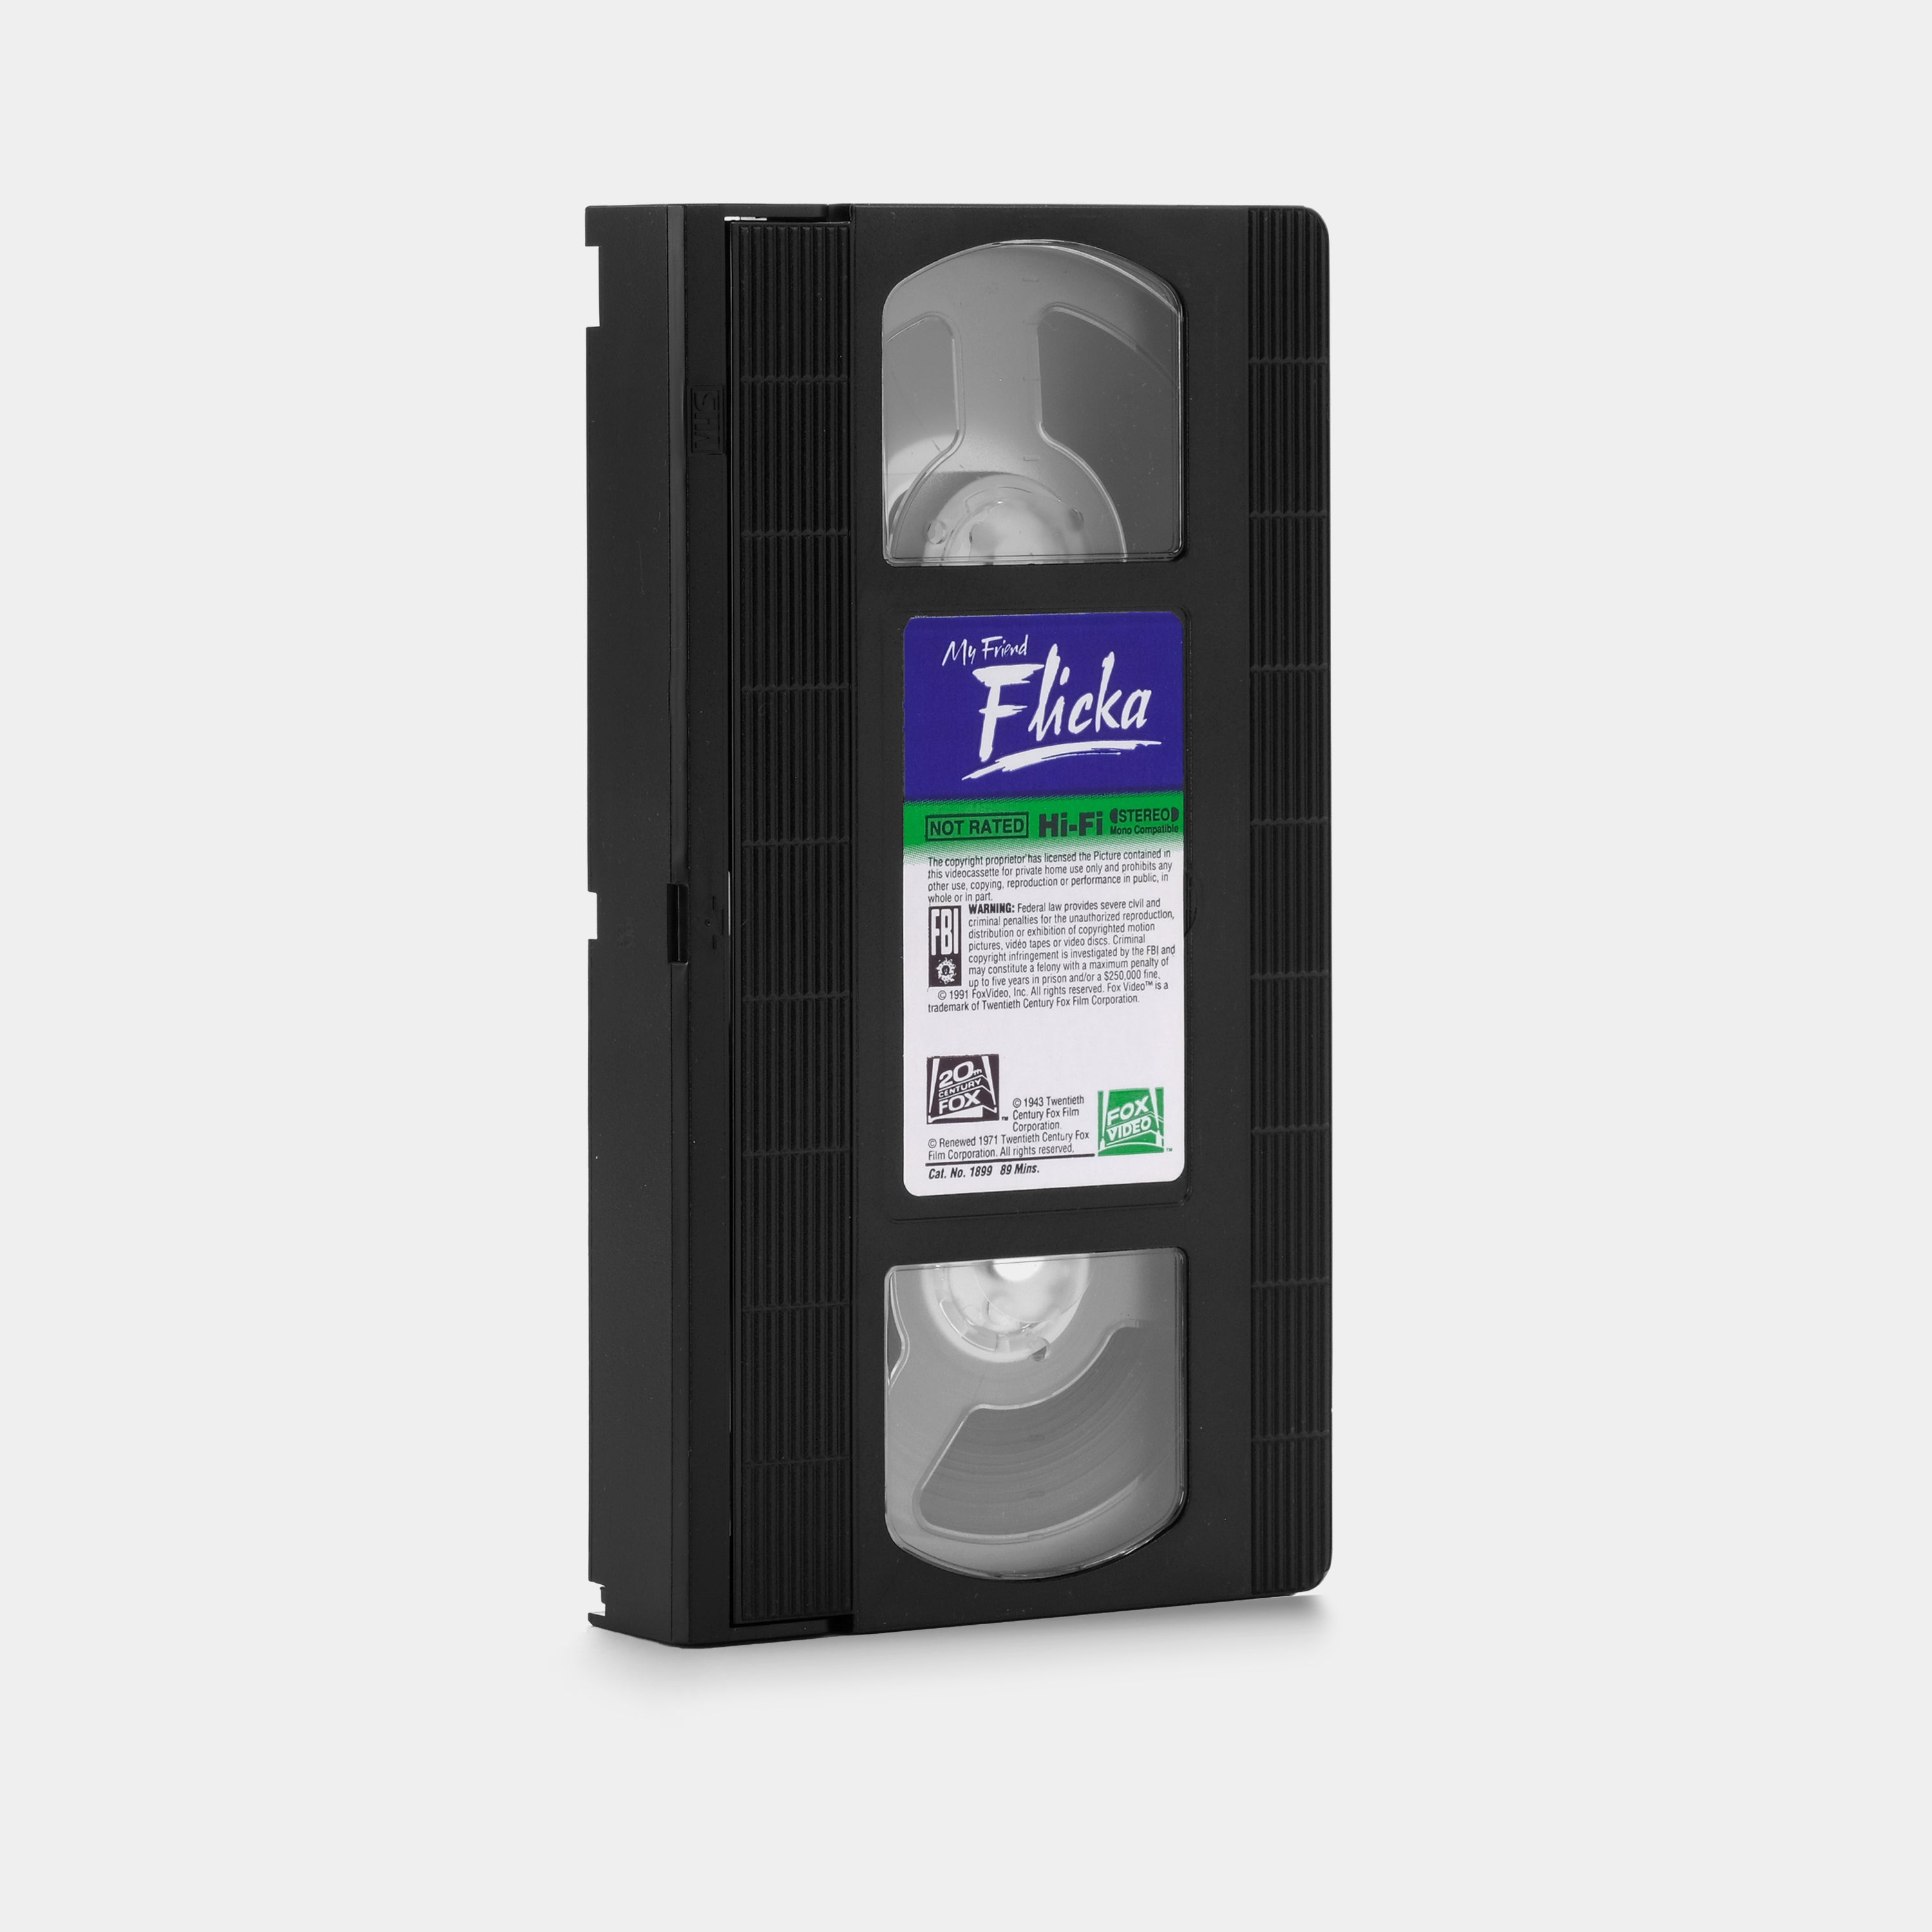 My Friend Flicka VHS Tape